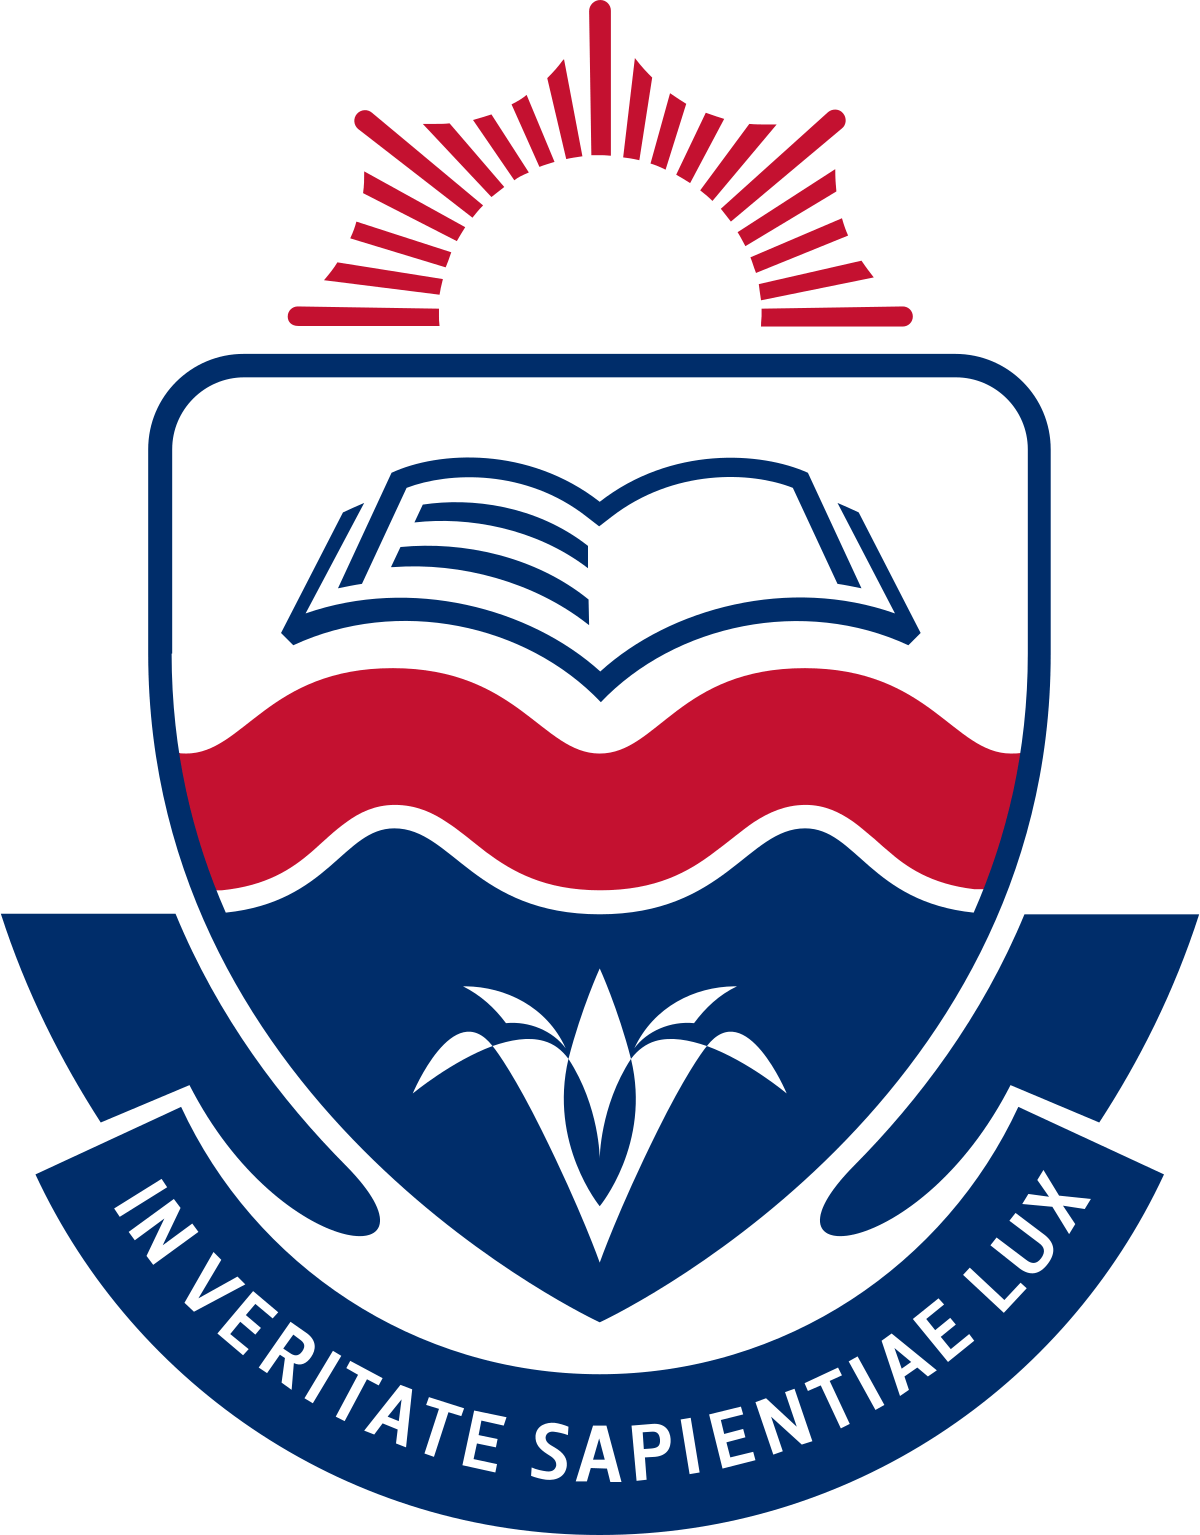 UFS Logo - University of the Free State